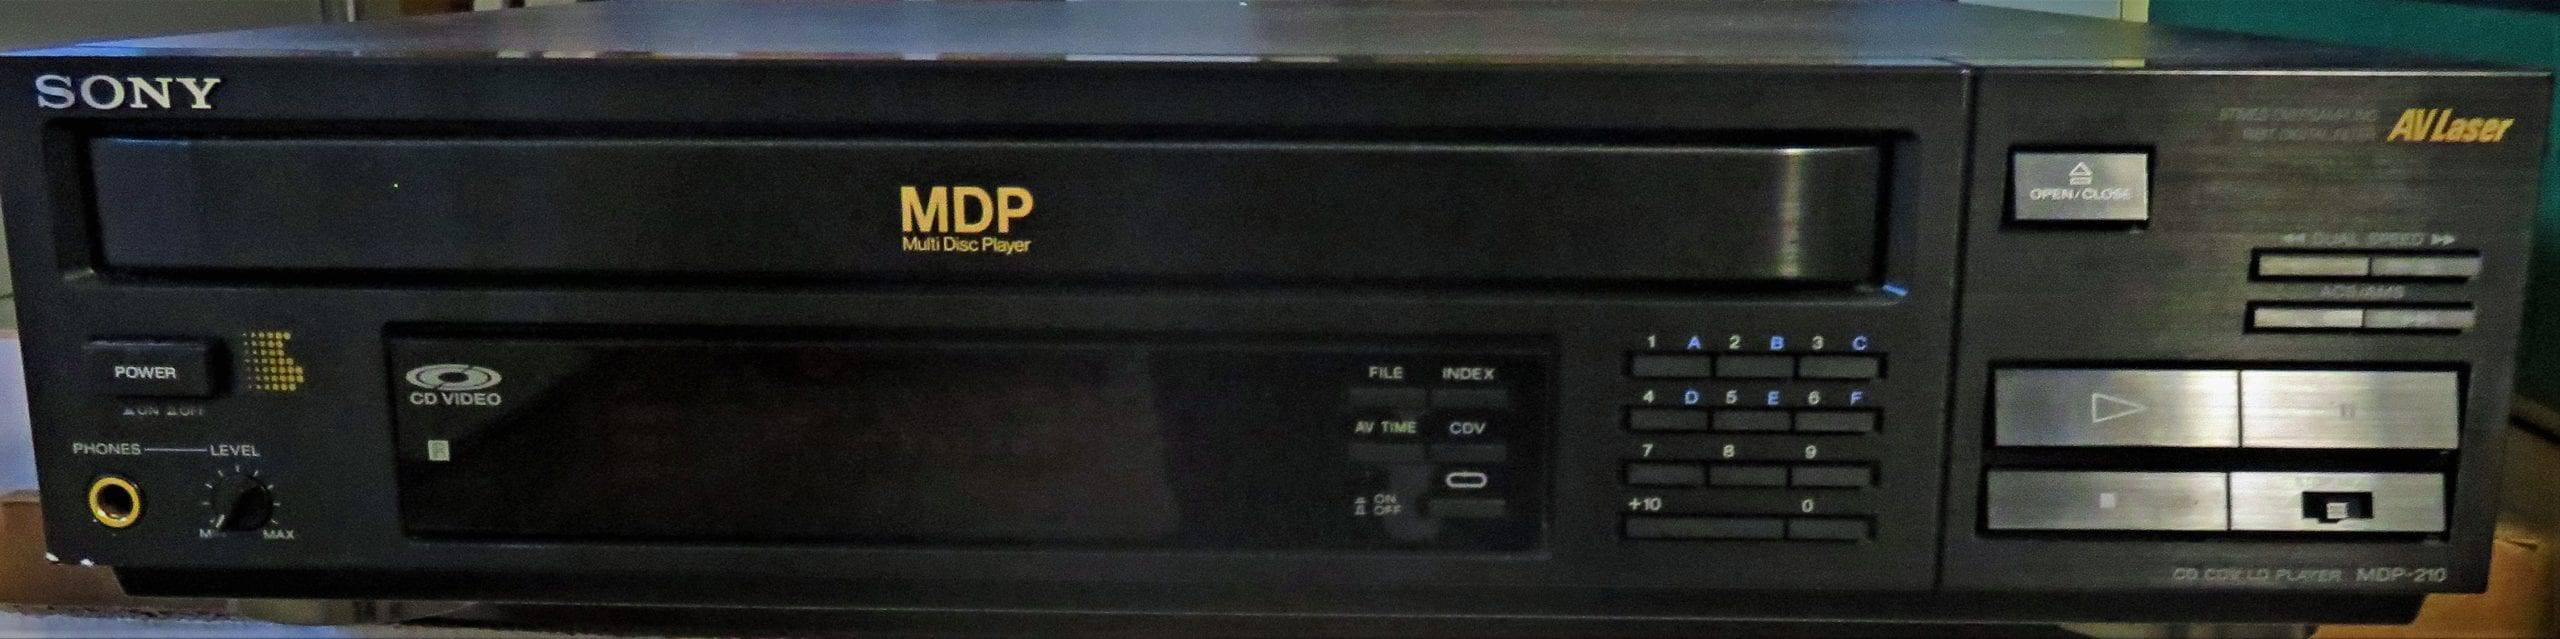 Sony MDP-210